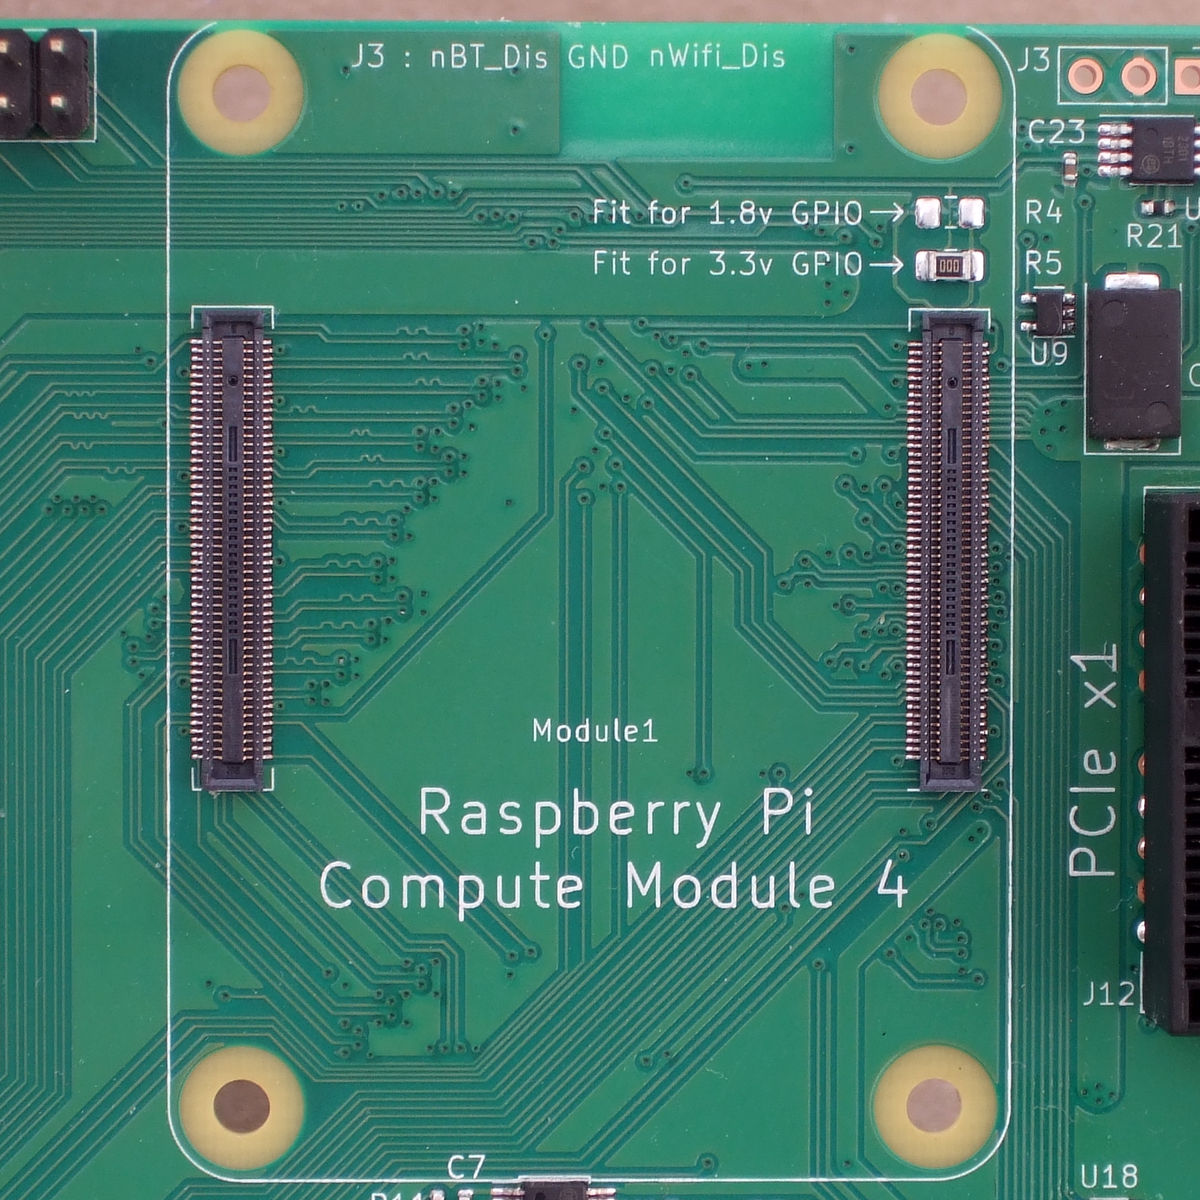 3 4 board. Raspberry Pi 3 Compute Module pinout. Raspberry cm4 pinout. Raspberry Pi Compute Module 4 распиновка. Cm4.